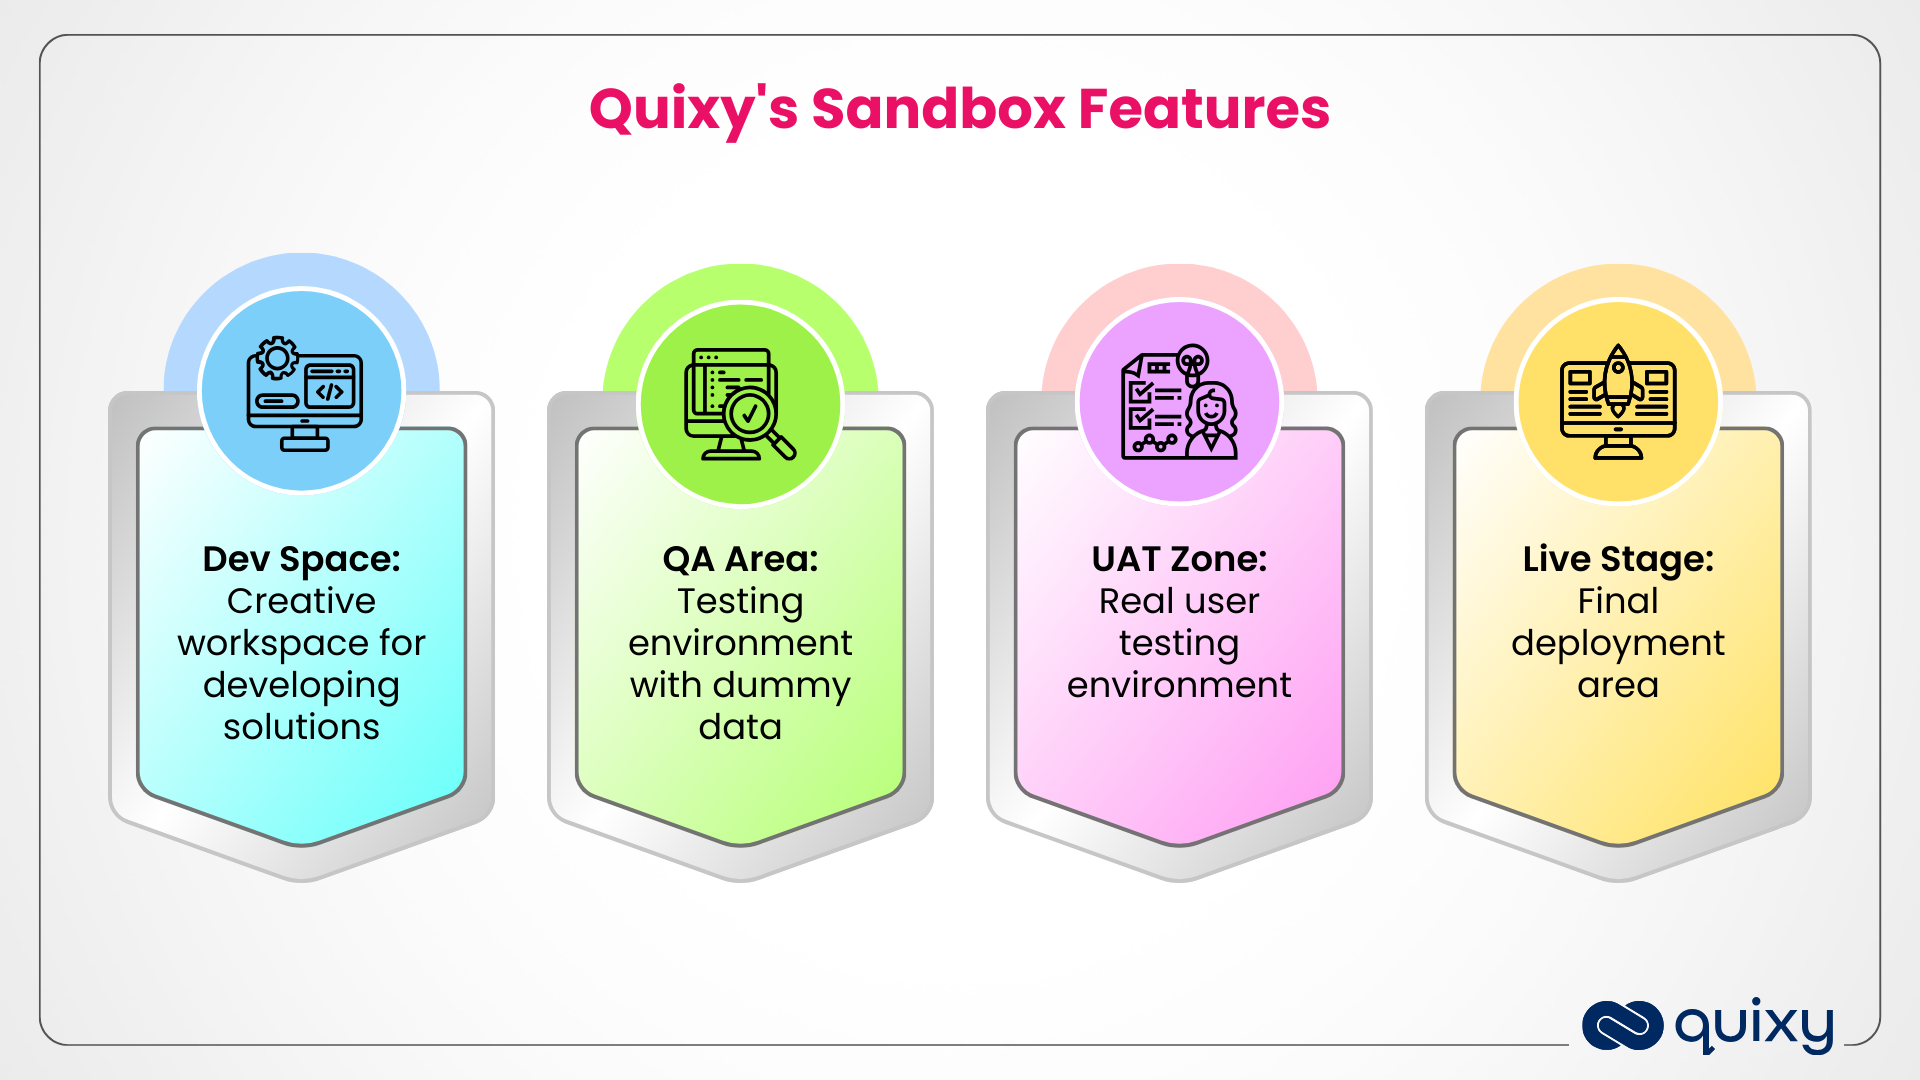 Quixy's Sandbox Features